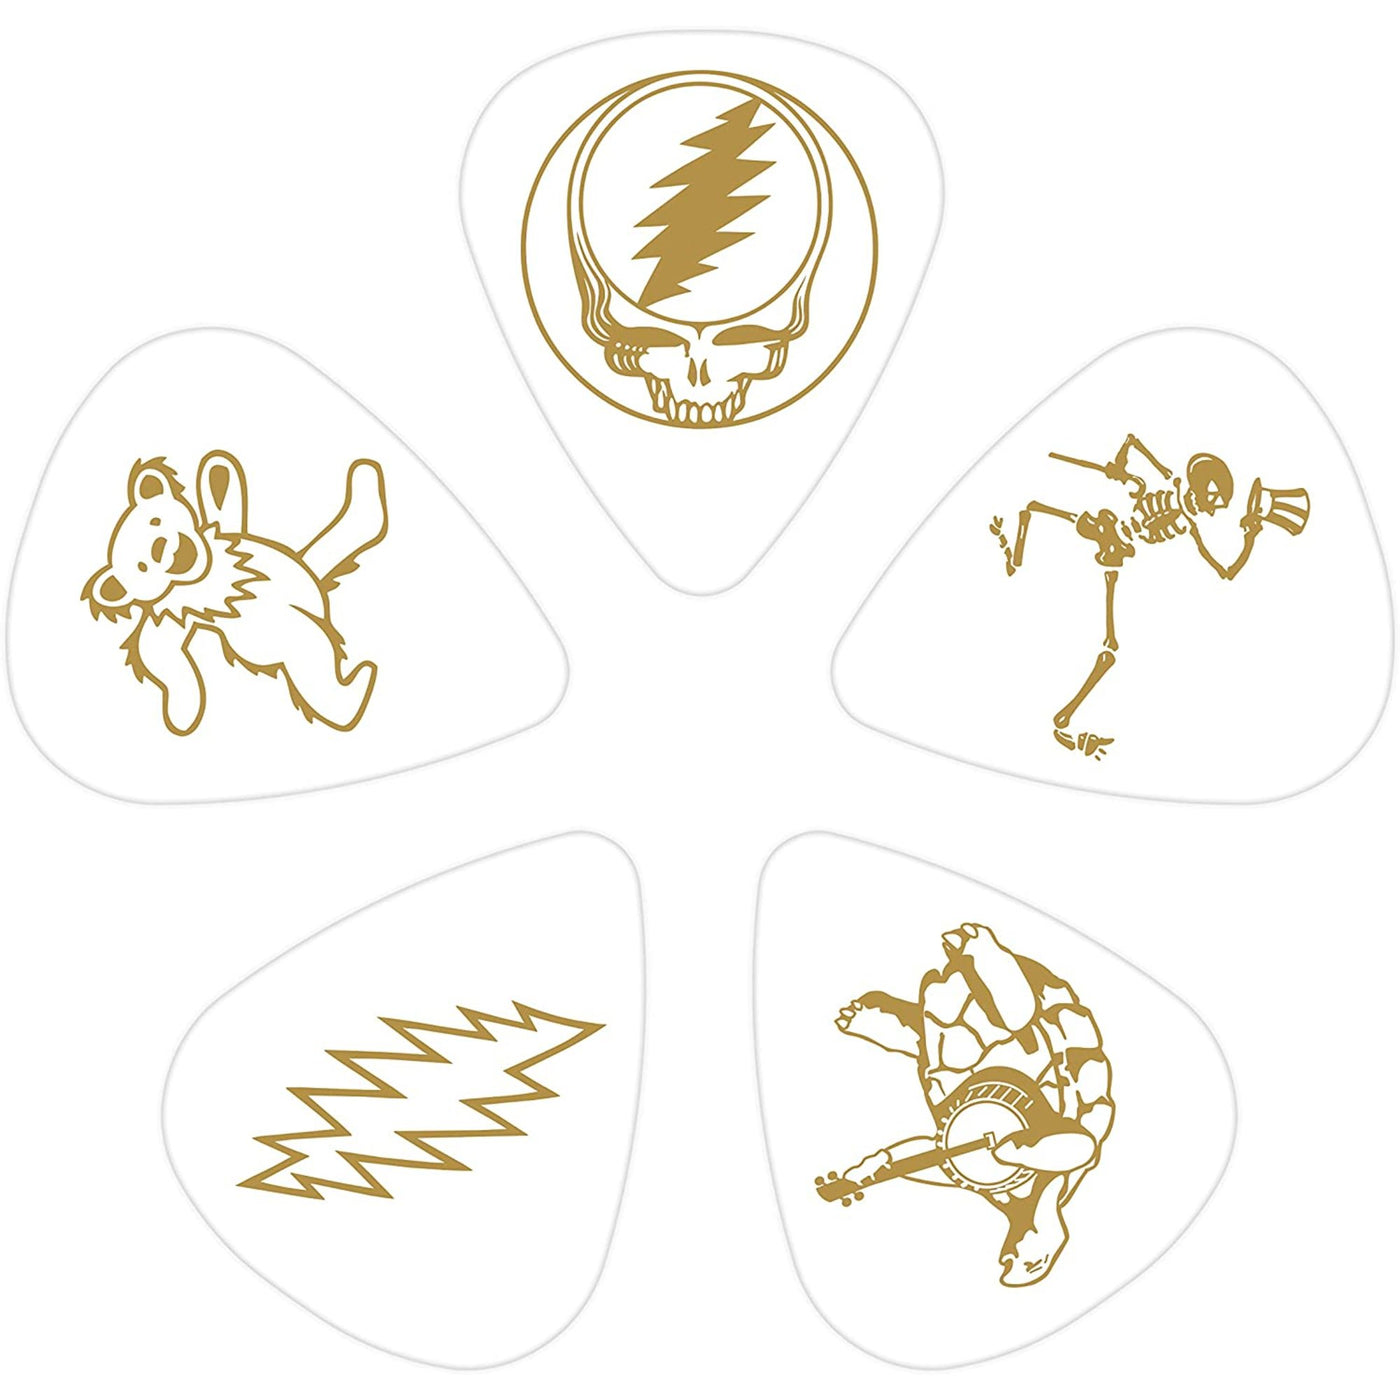 D'Addario Grateful Dead Icons Guitar Picks, White, 10 Pack, Medium (1CWH4-10GD2)